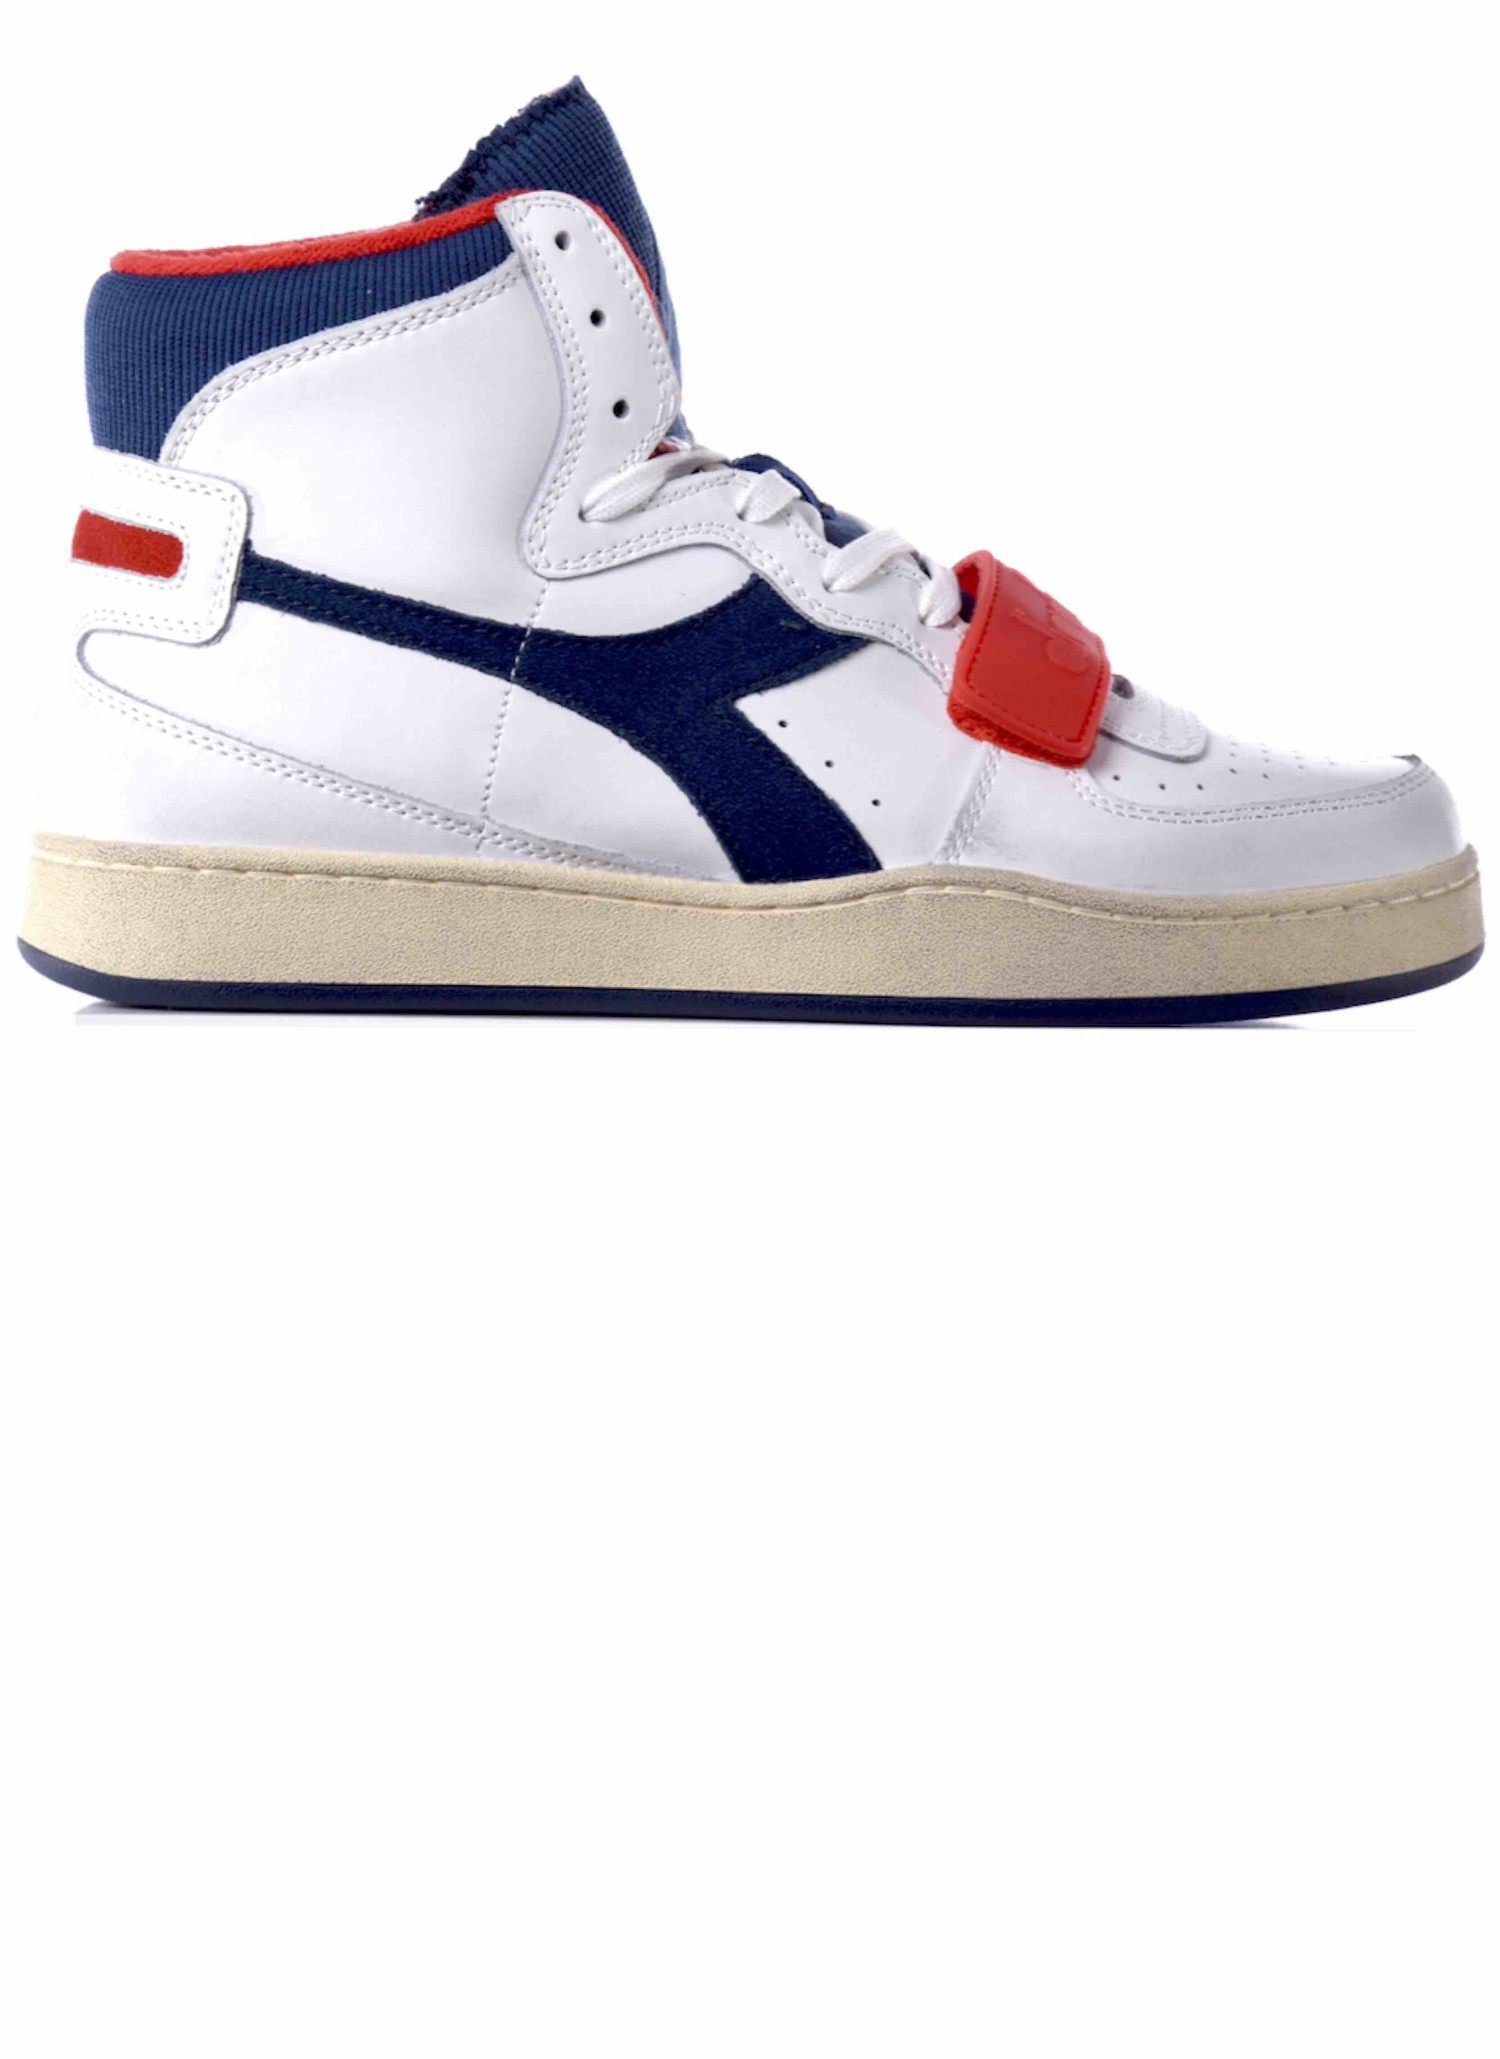 Diadora Basket High Sneakers Blue \u0026 Red 